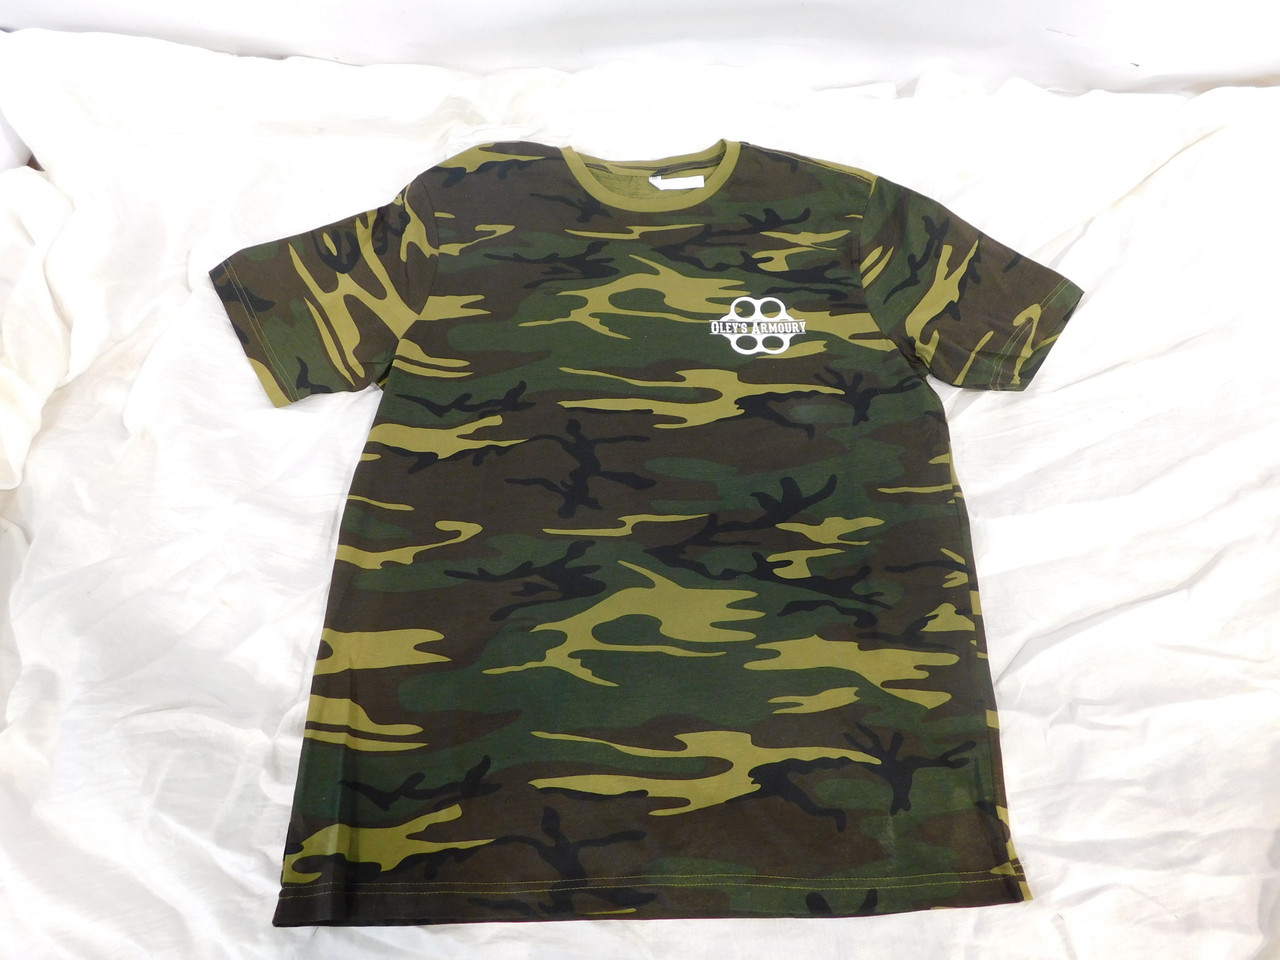 Oley's Armoury T-Shirt Camo - Medium